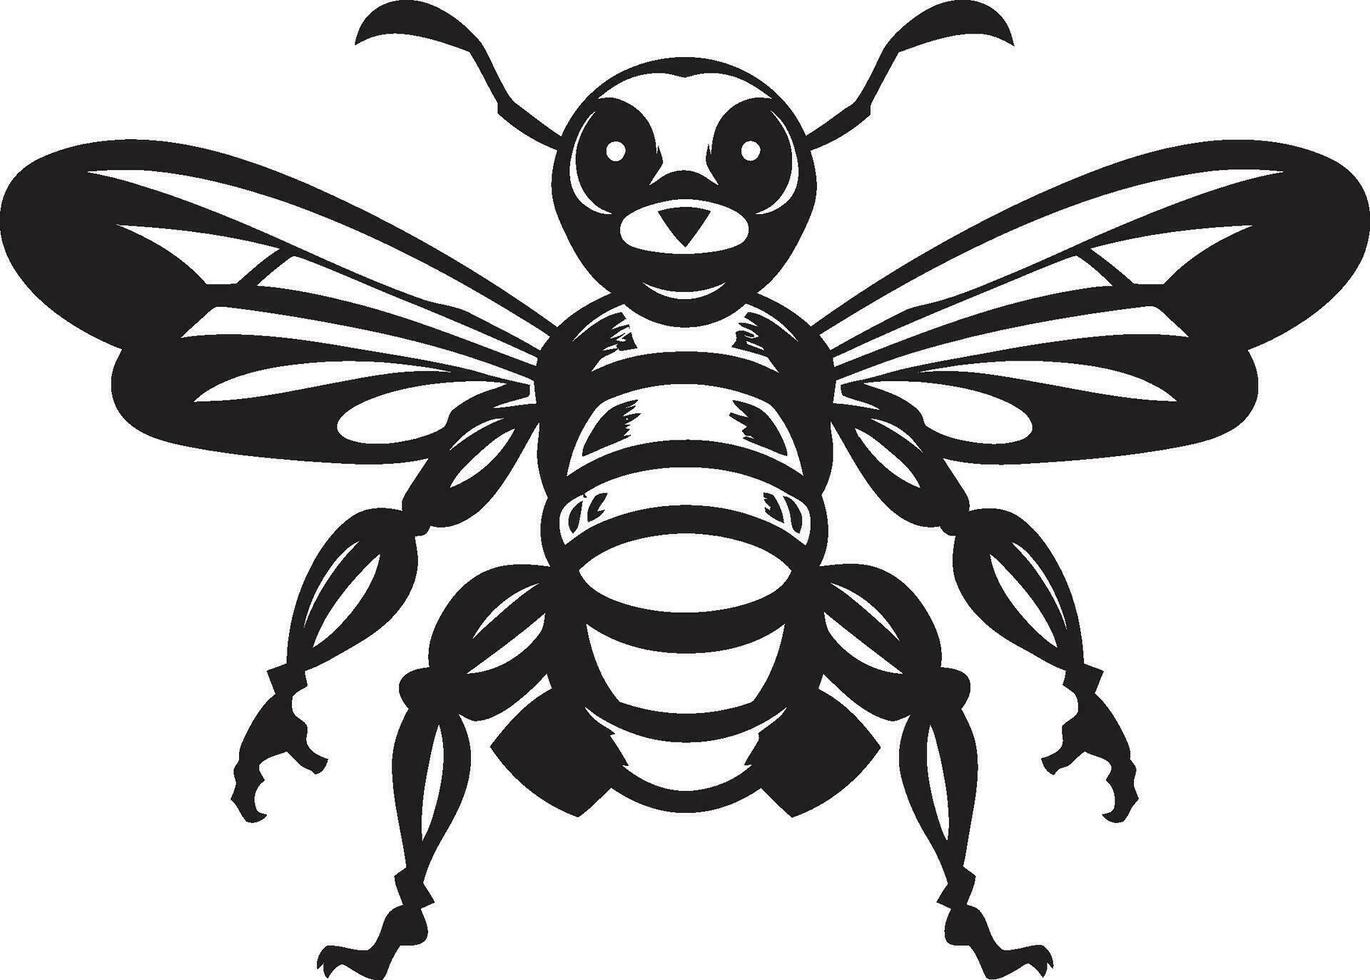 edel Insekt Emblem monochromatisch Symbol mächtig Stachel Majestät Logo Kunst vektor